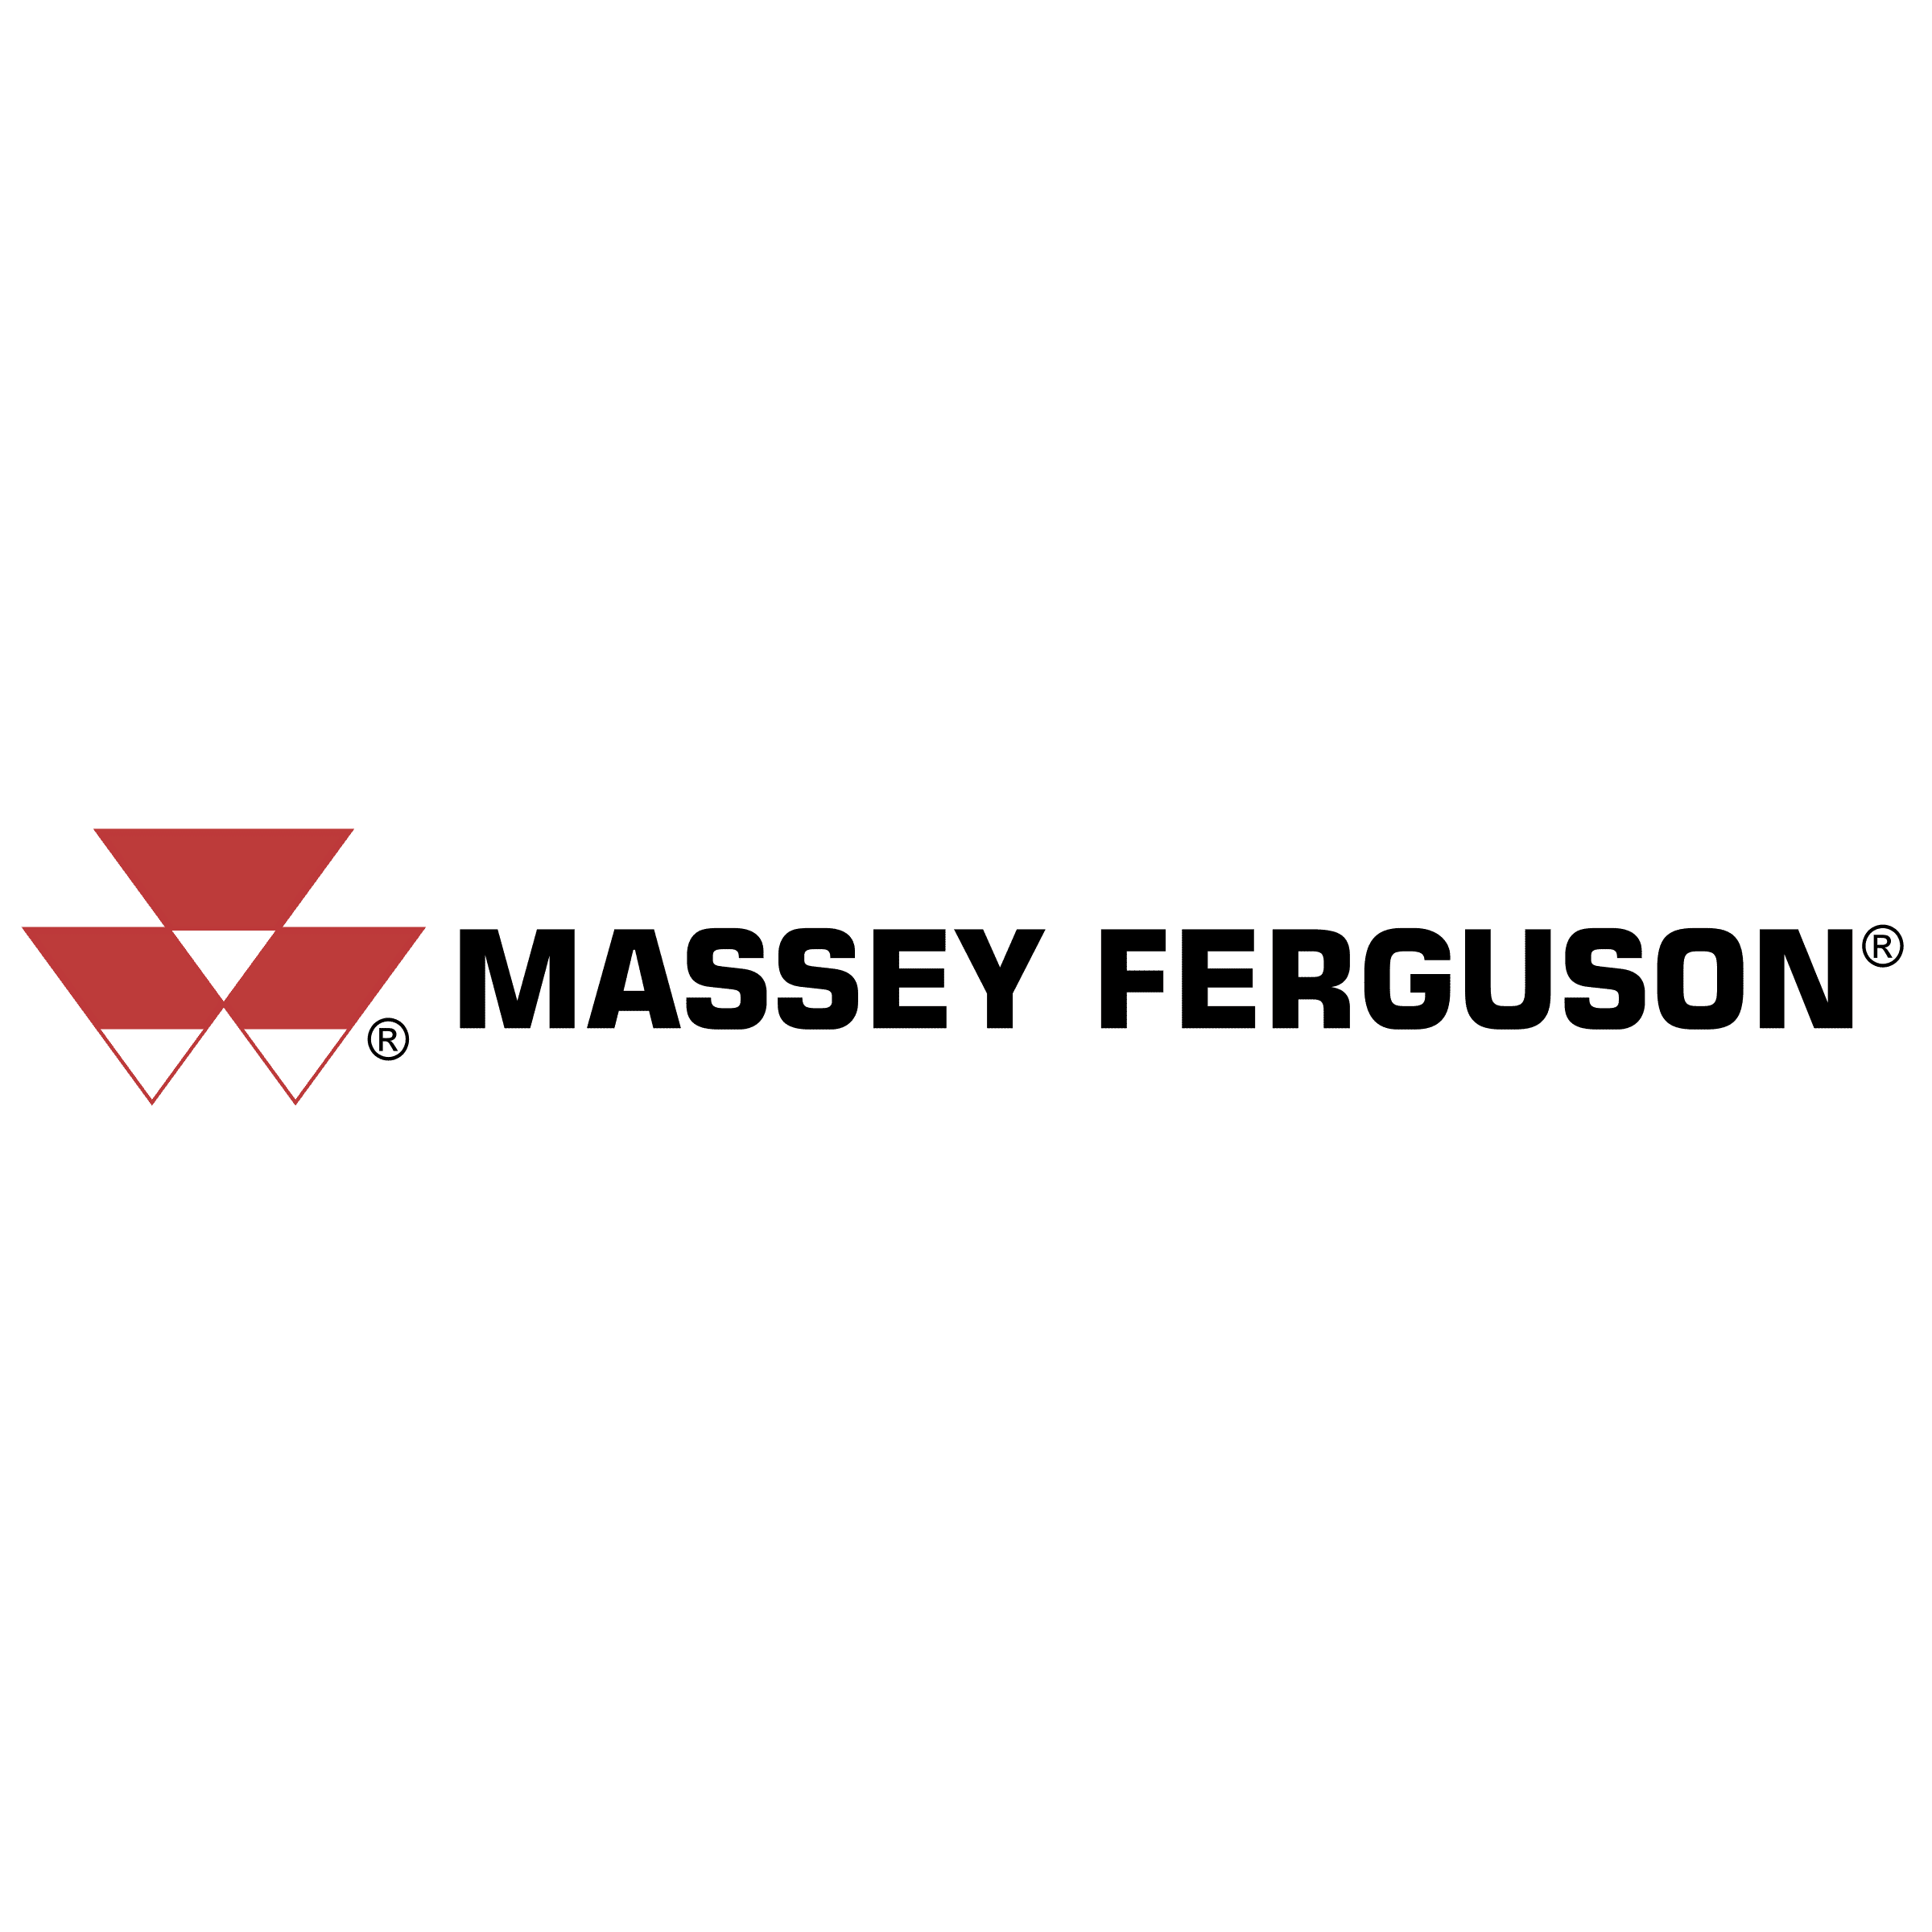 massey-ferguson-1-logo-png-transparent.png